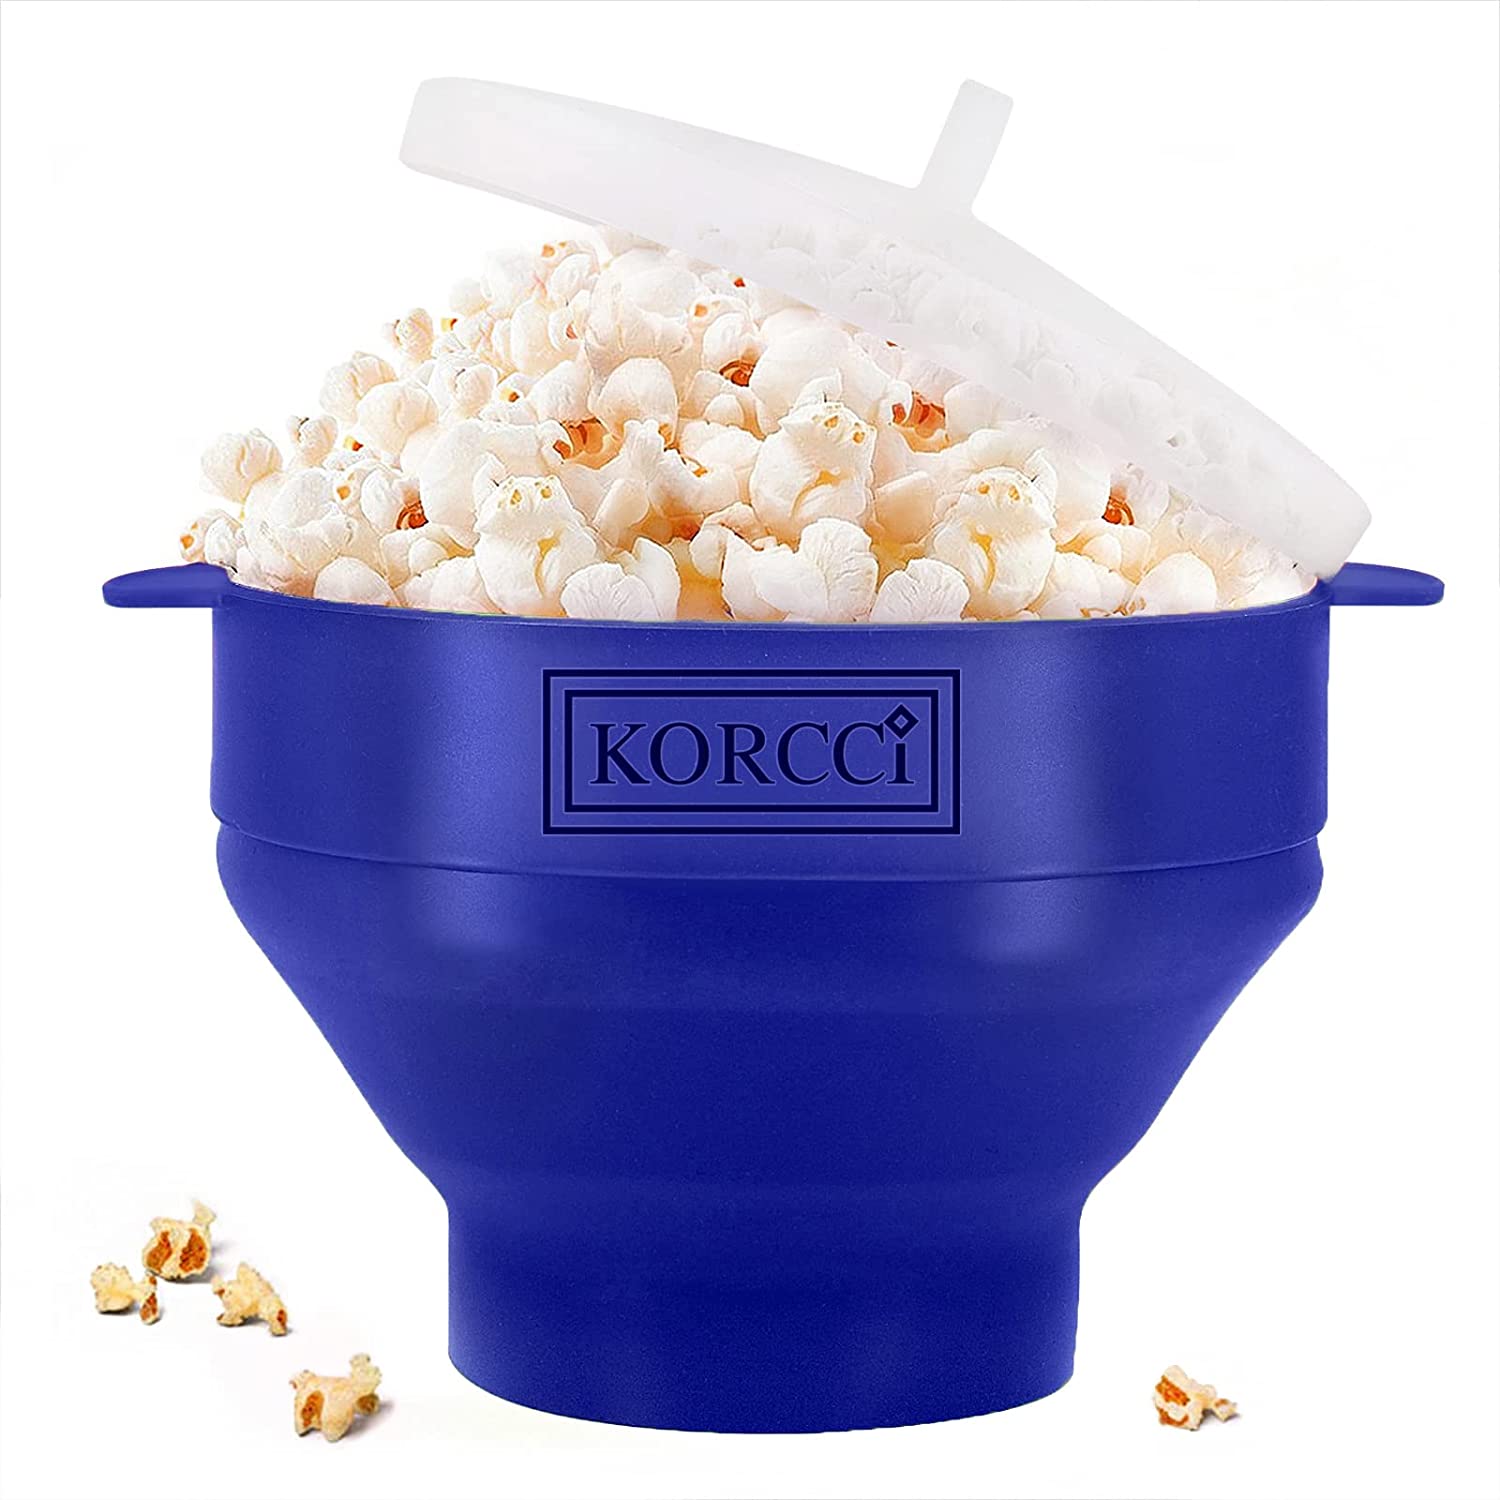 https://www.dontwasteyourmoney.com/wp-content/uploads/2022/08/korcci-space-saving-ultra-fast-popcorn-maker-popcorn-maker.jpg